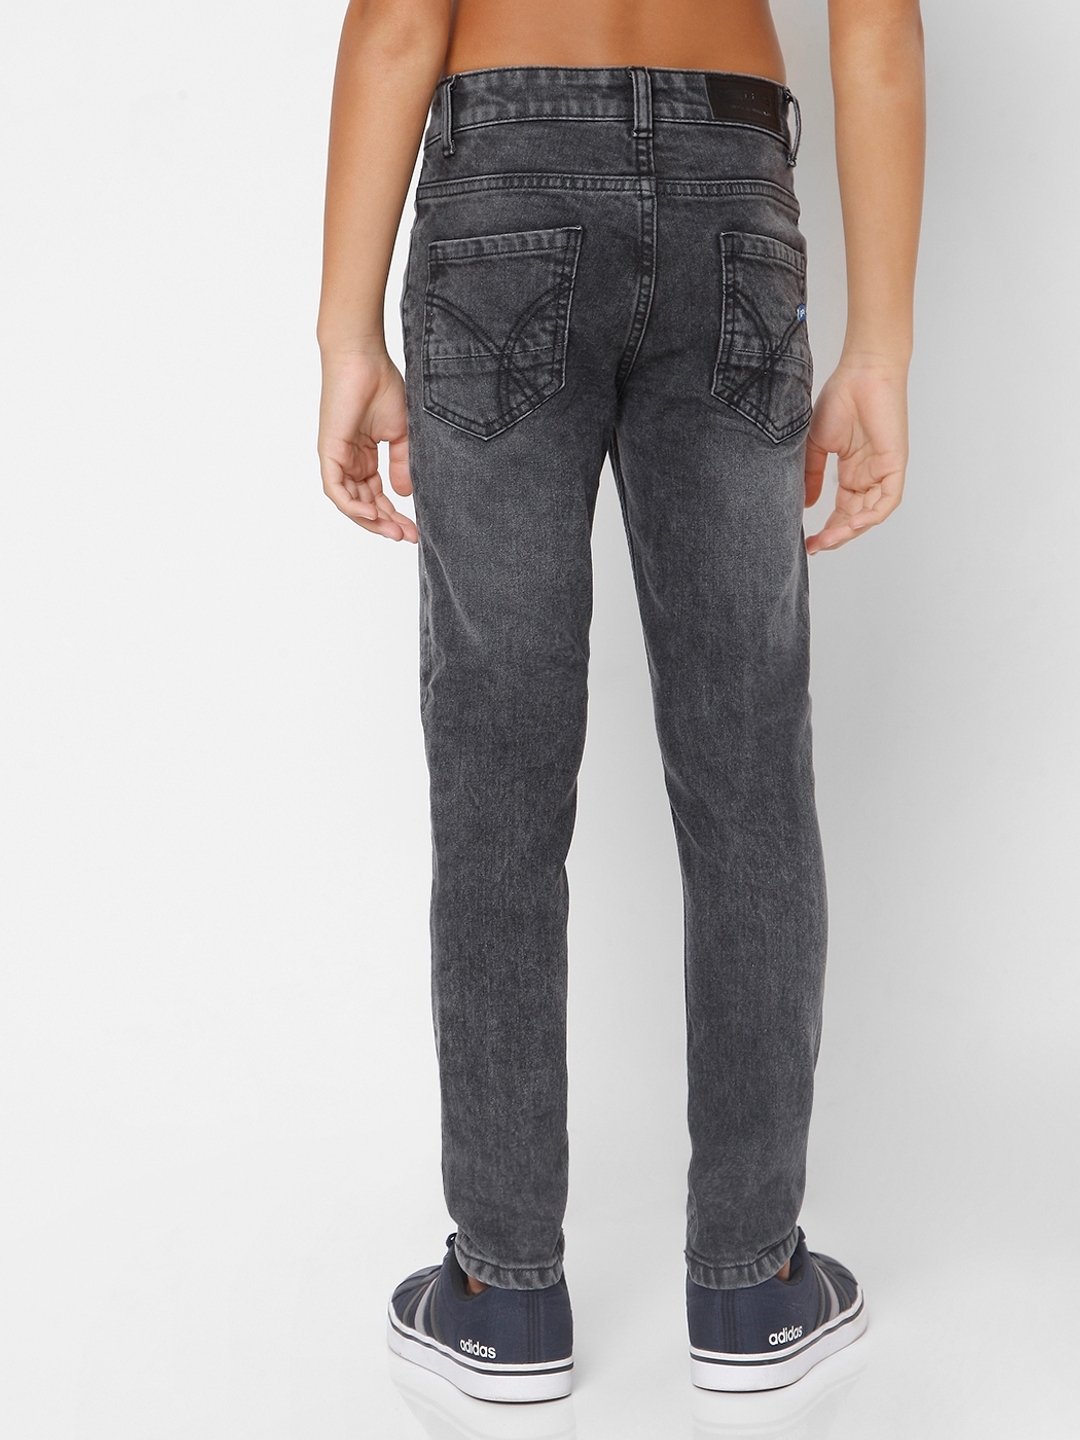 Buy Blue Mid Rise Clark Straight Jeans for Boys Online at Jack&Jones Junior  |212565601